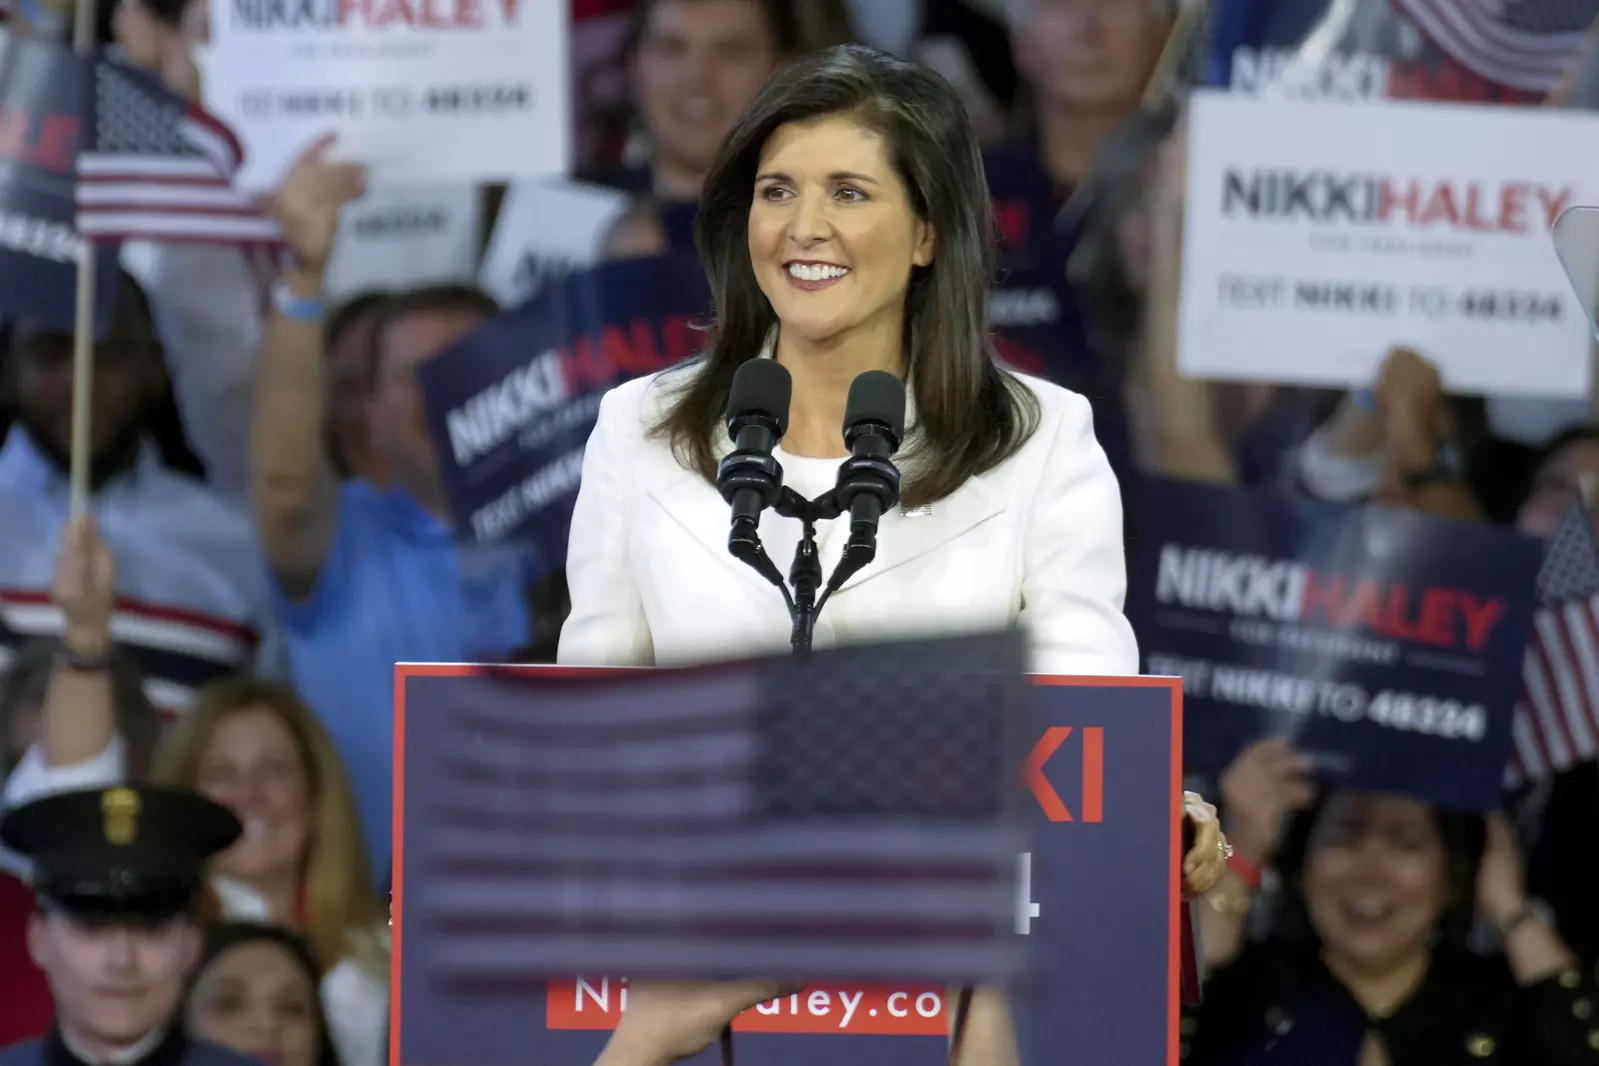 Nikki Haley launches US presidential bid